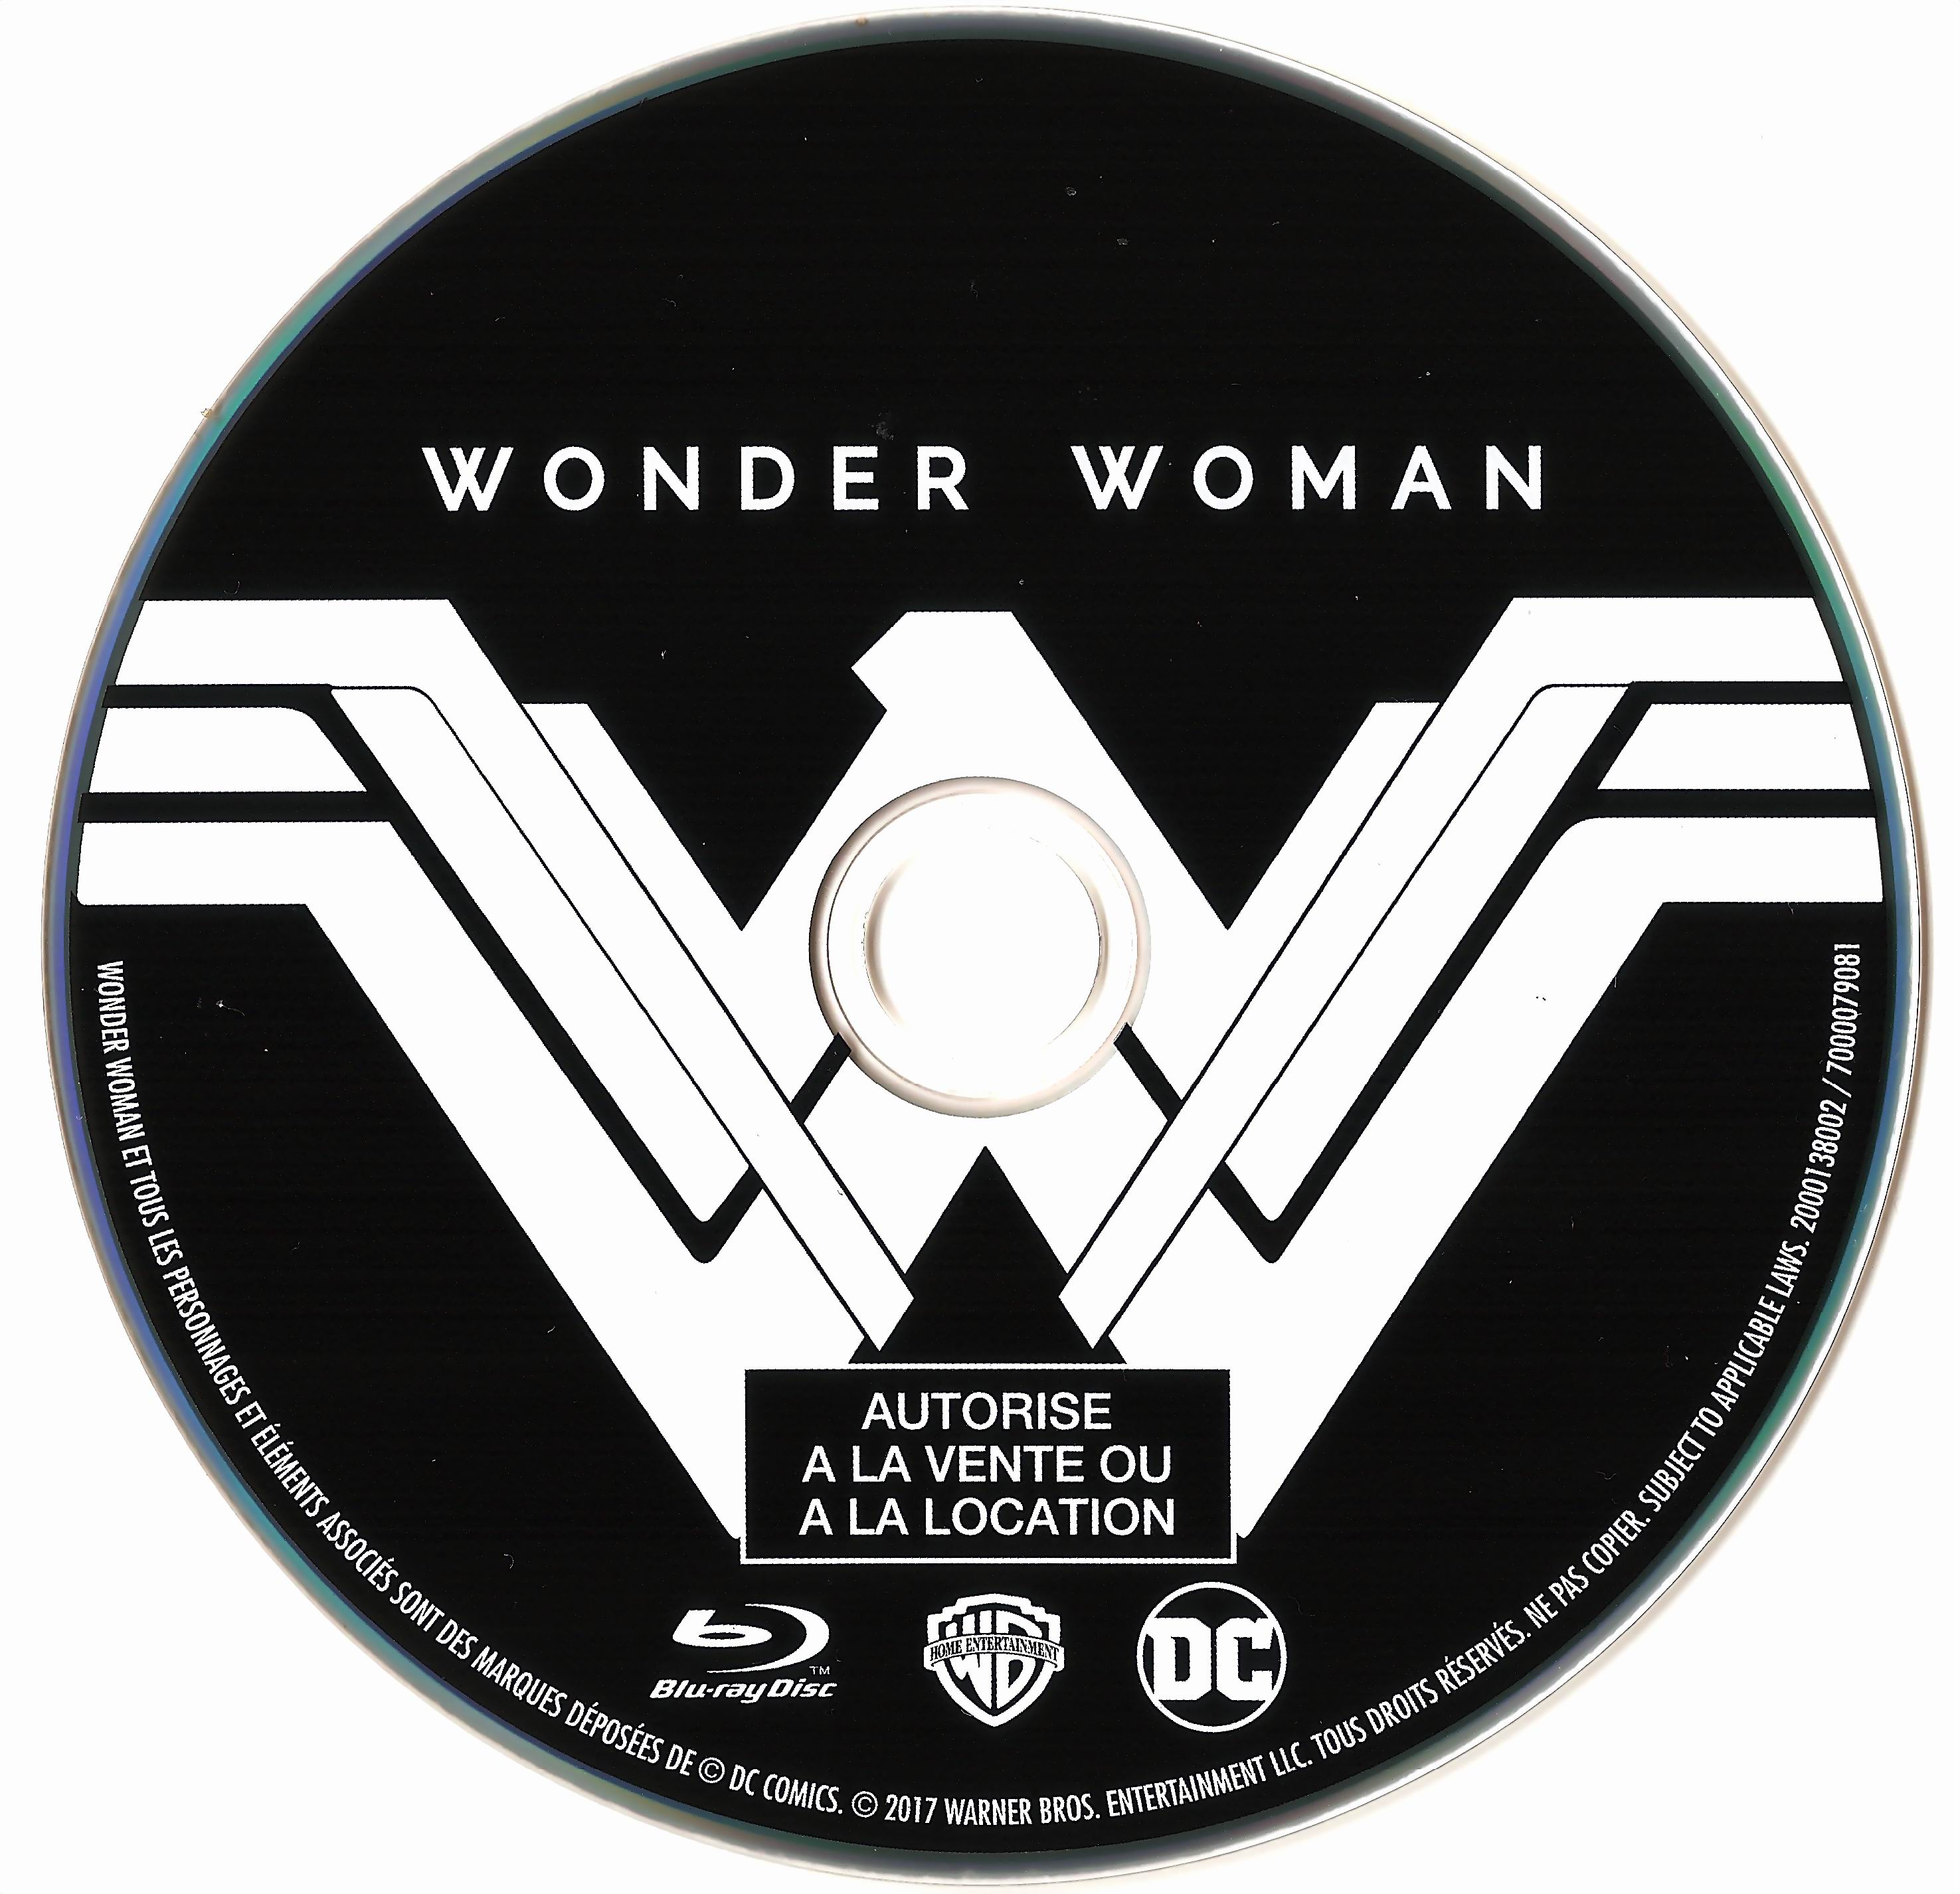 Wonder woman (BLU-RAY)